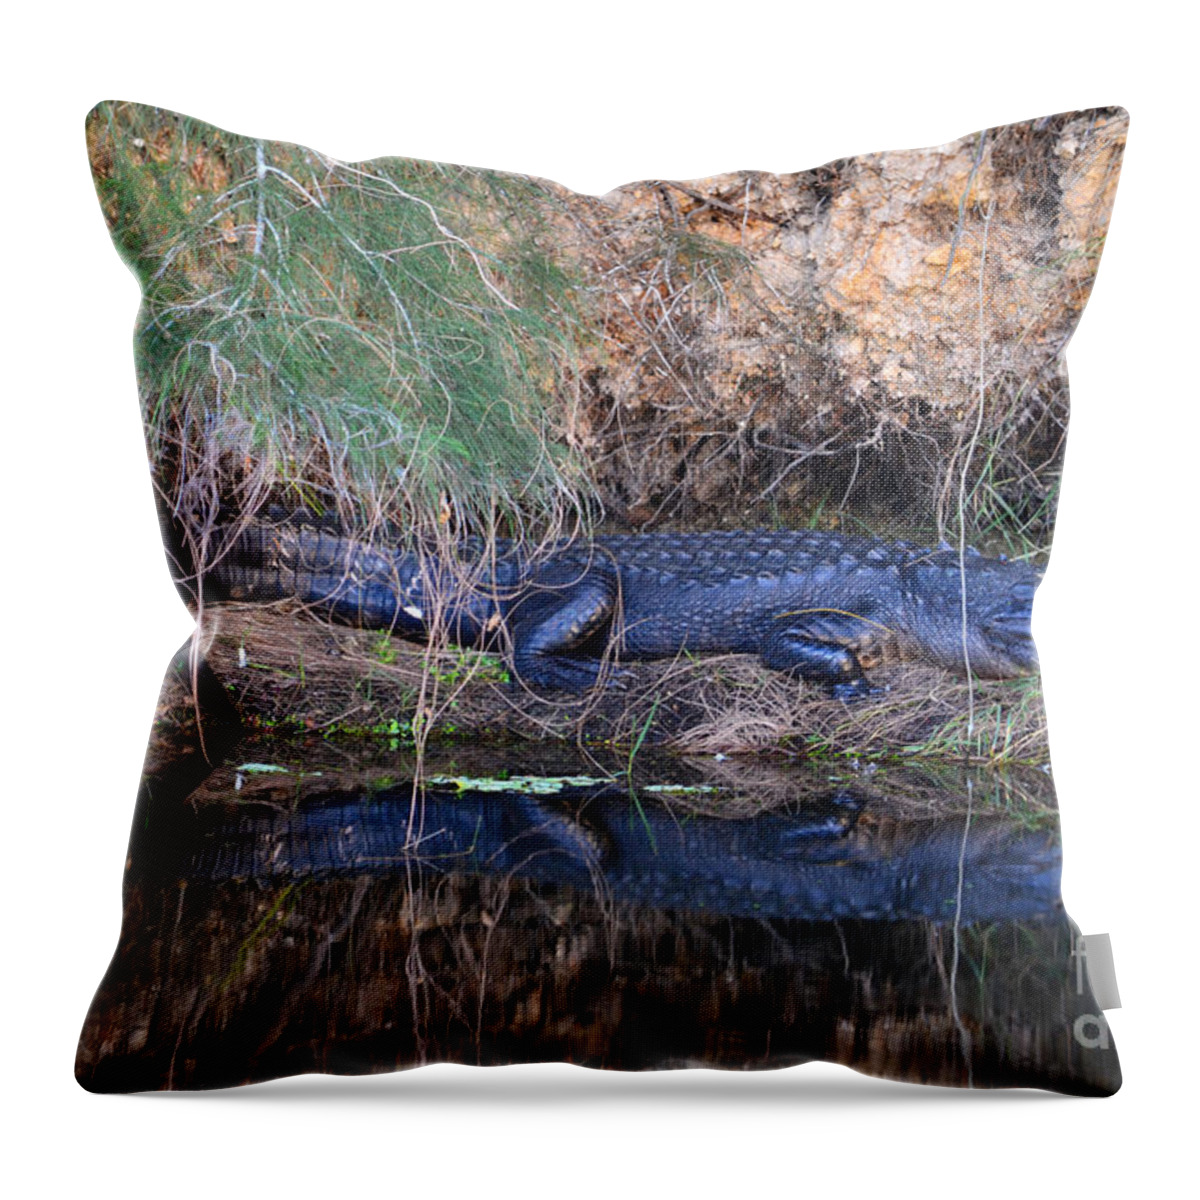 Florida Alligator Throw Pillow featuring the photograph 11- Florida Alligator by Joseph Keane